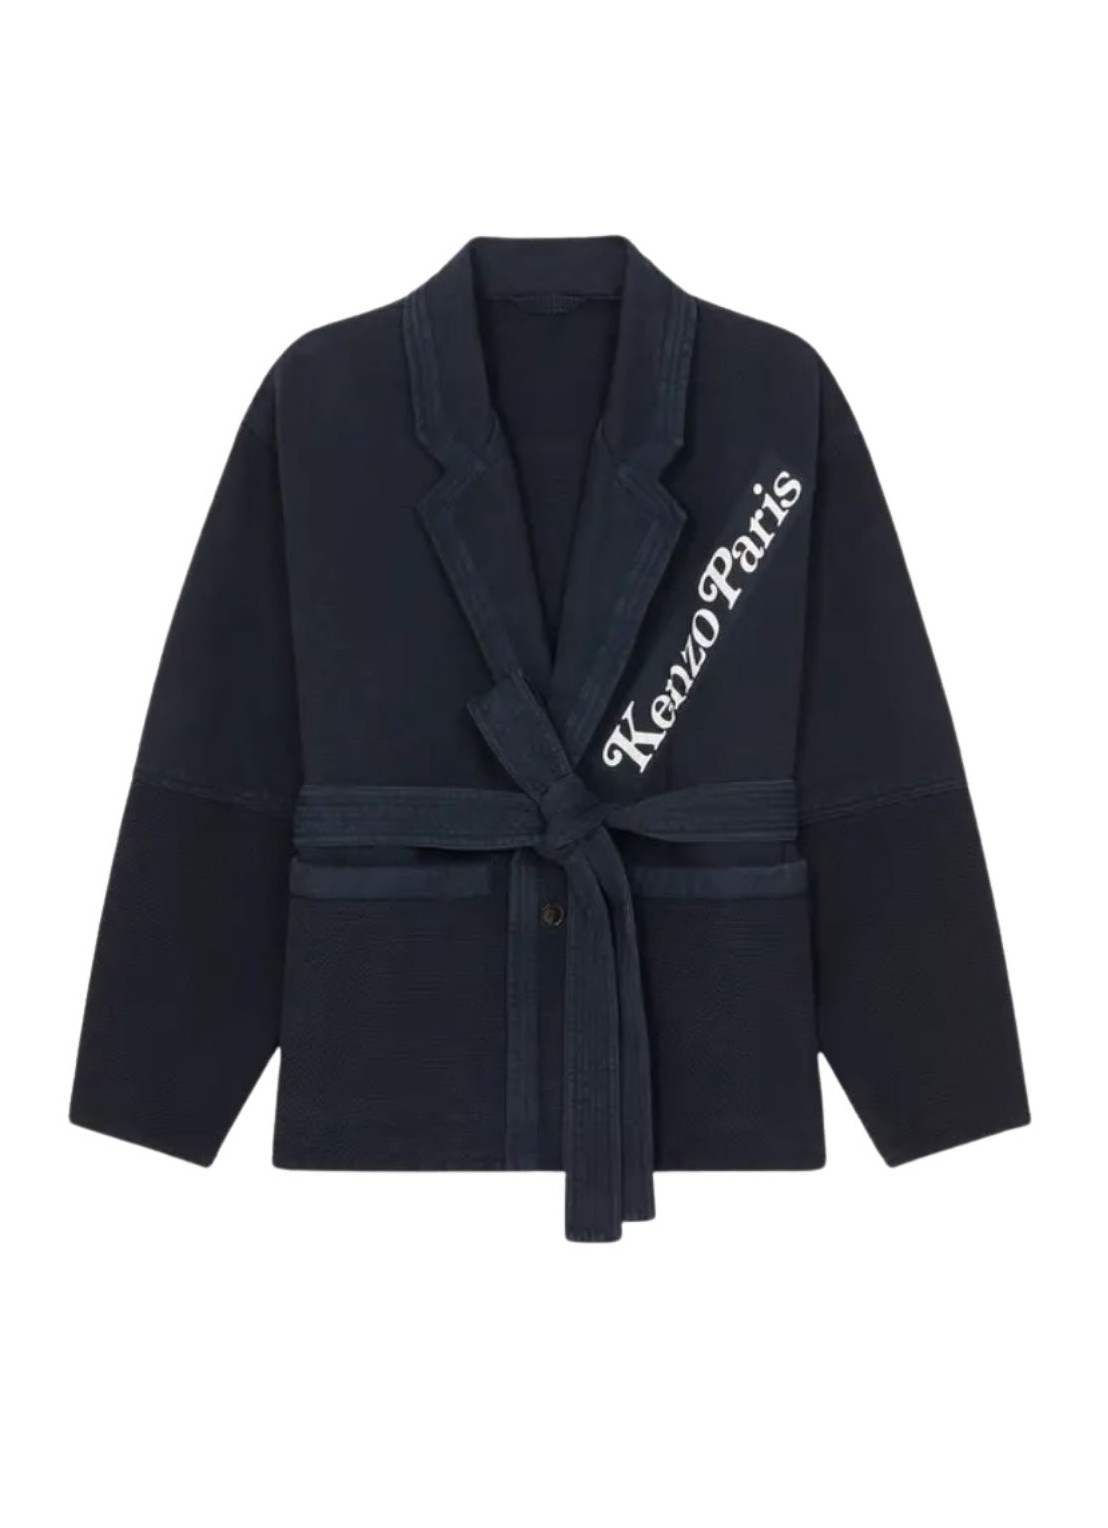 Outerwear kenzo outerwear man kenzo by verdy judo jacket fe55ve2279os 77 talla S
 